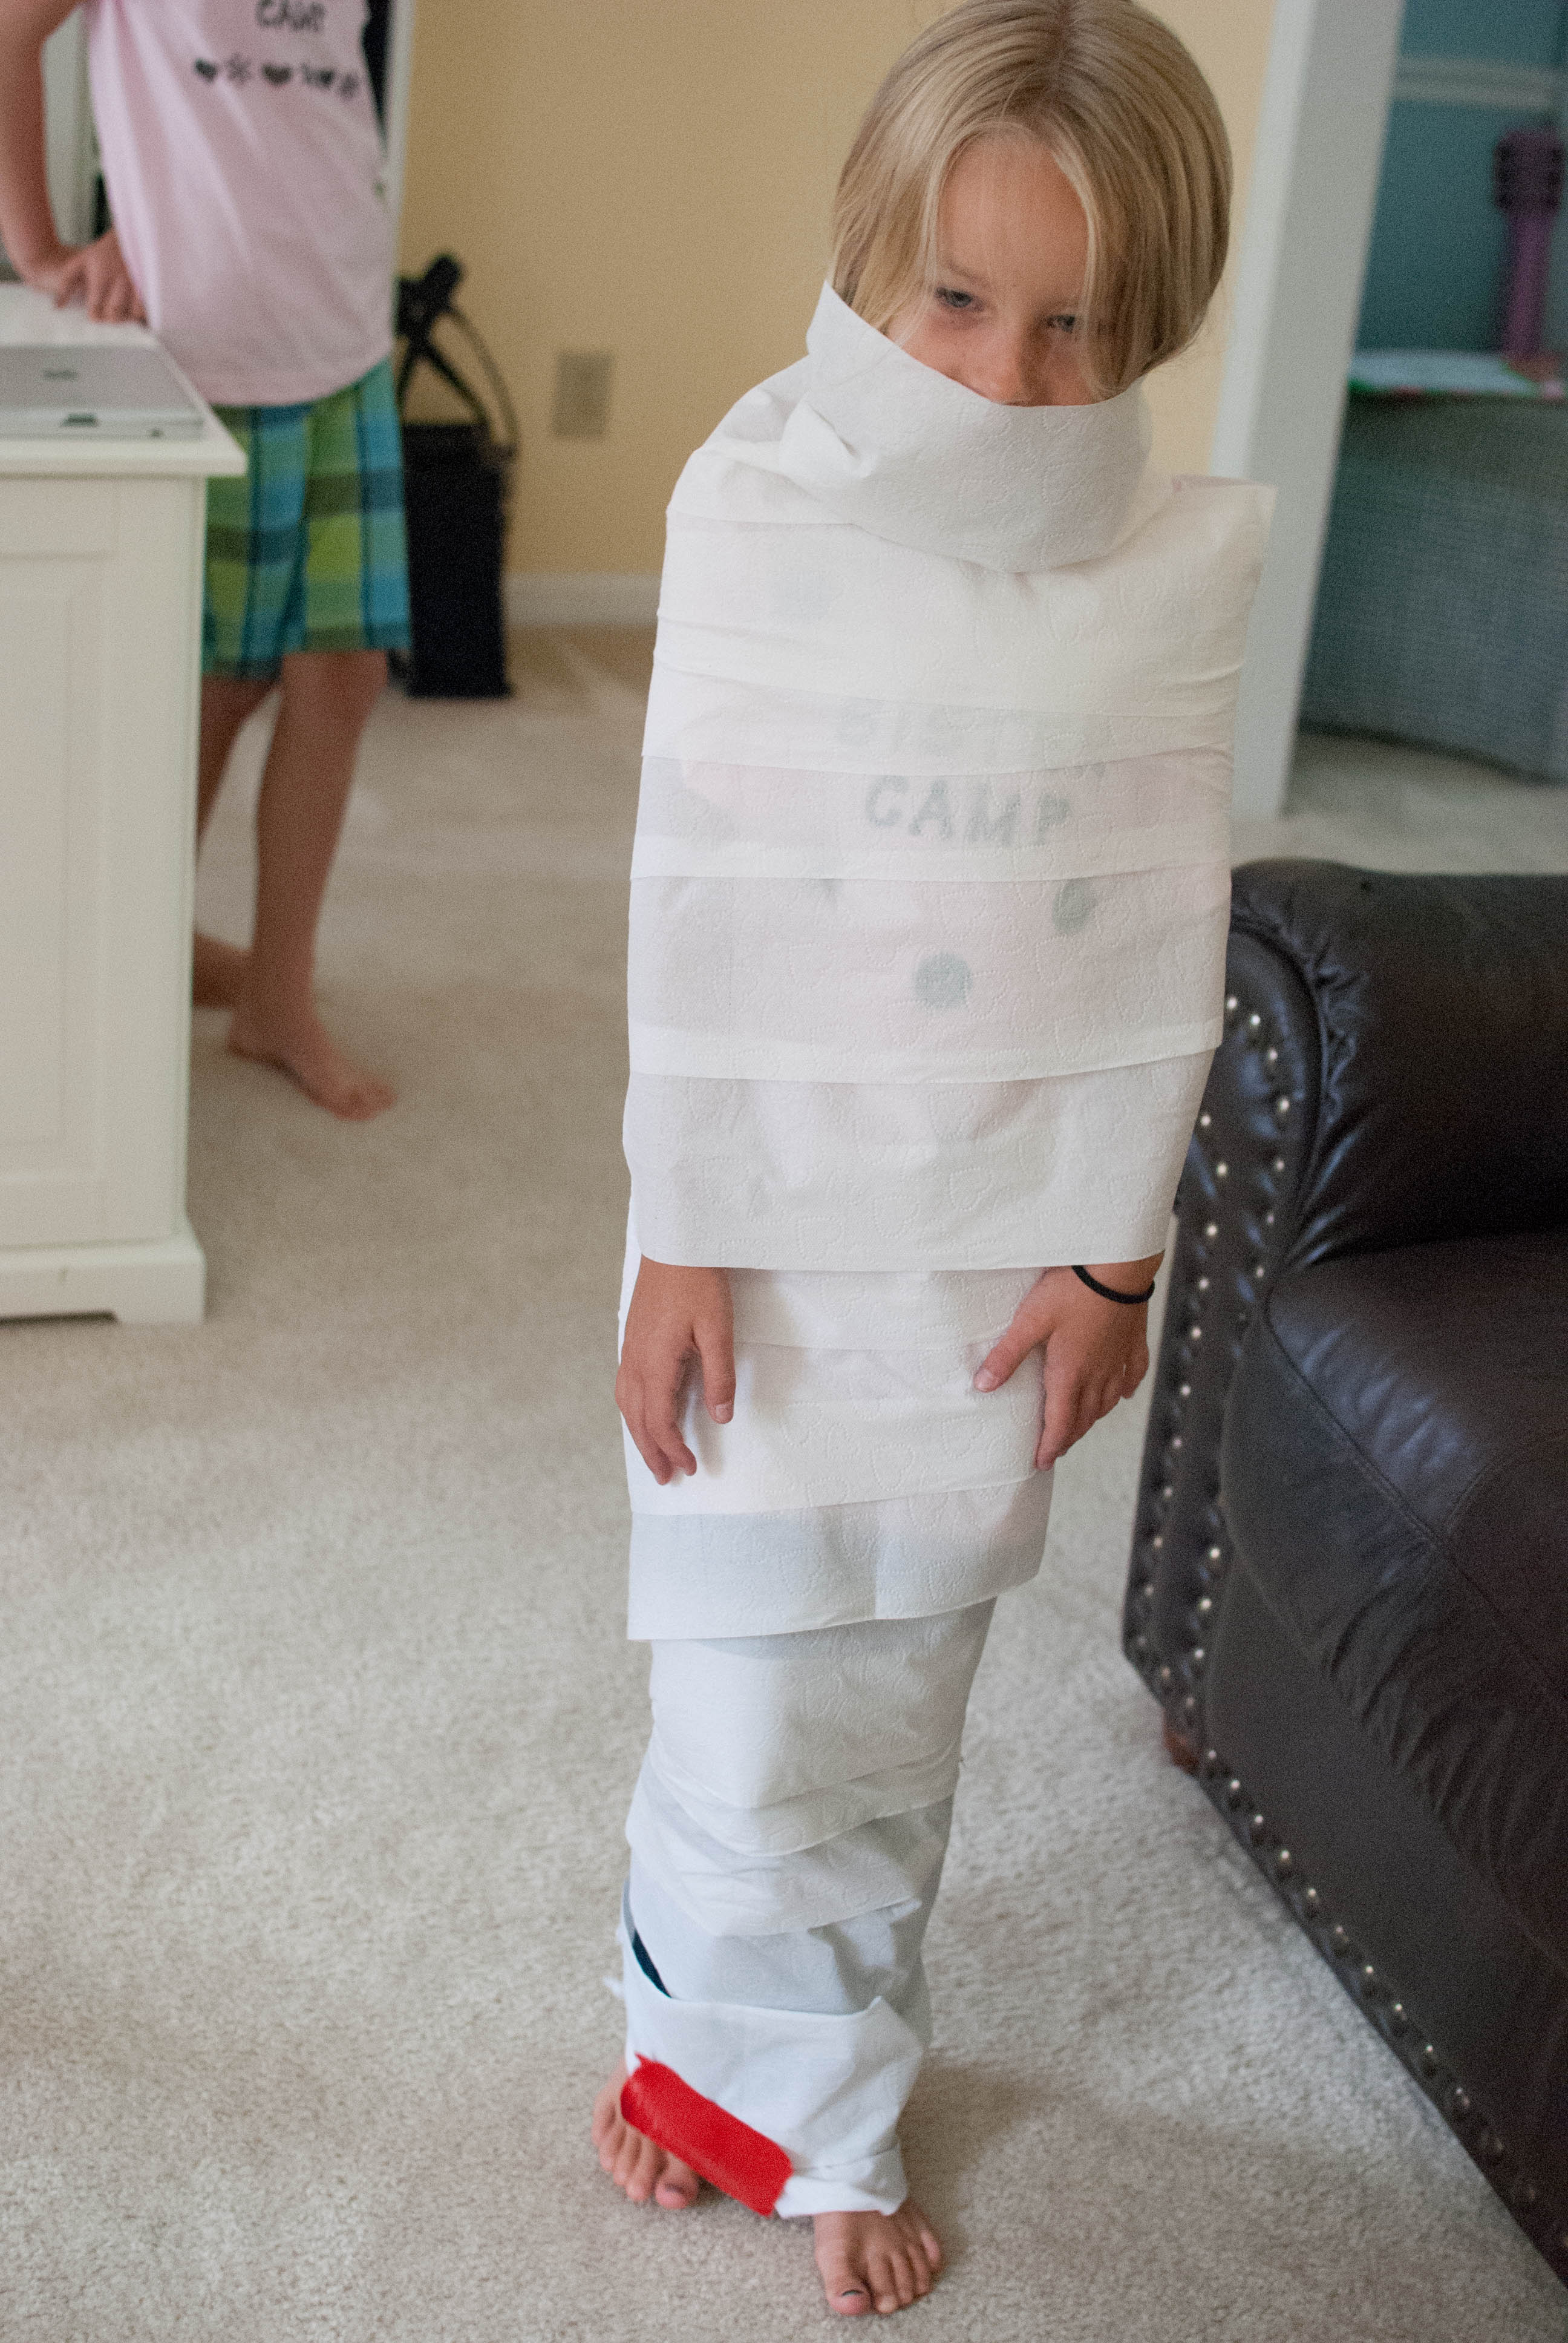 Tape mummy